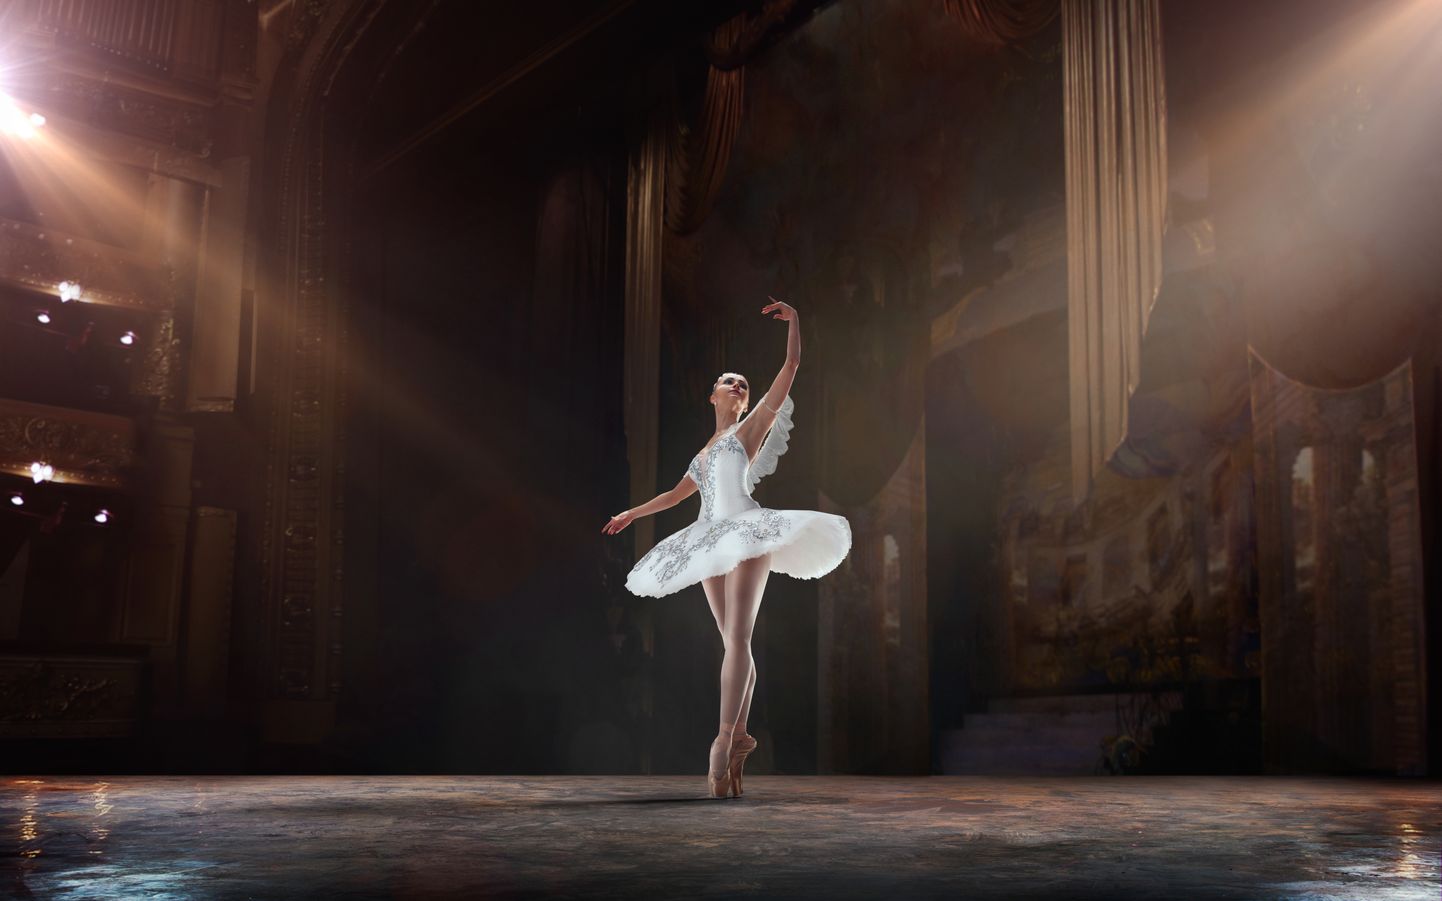 Балерина. Иллюстративное фото